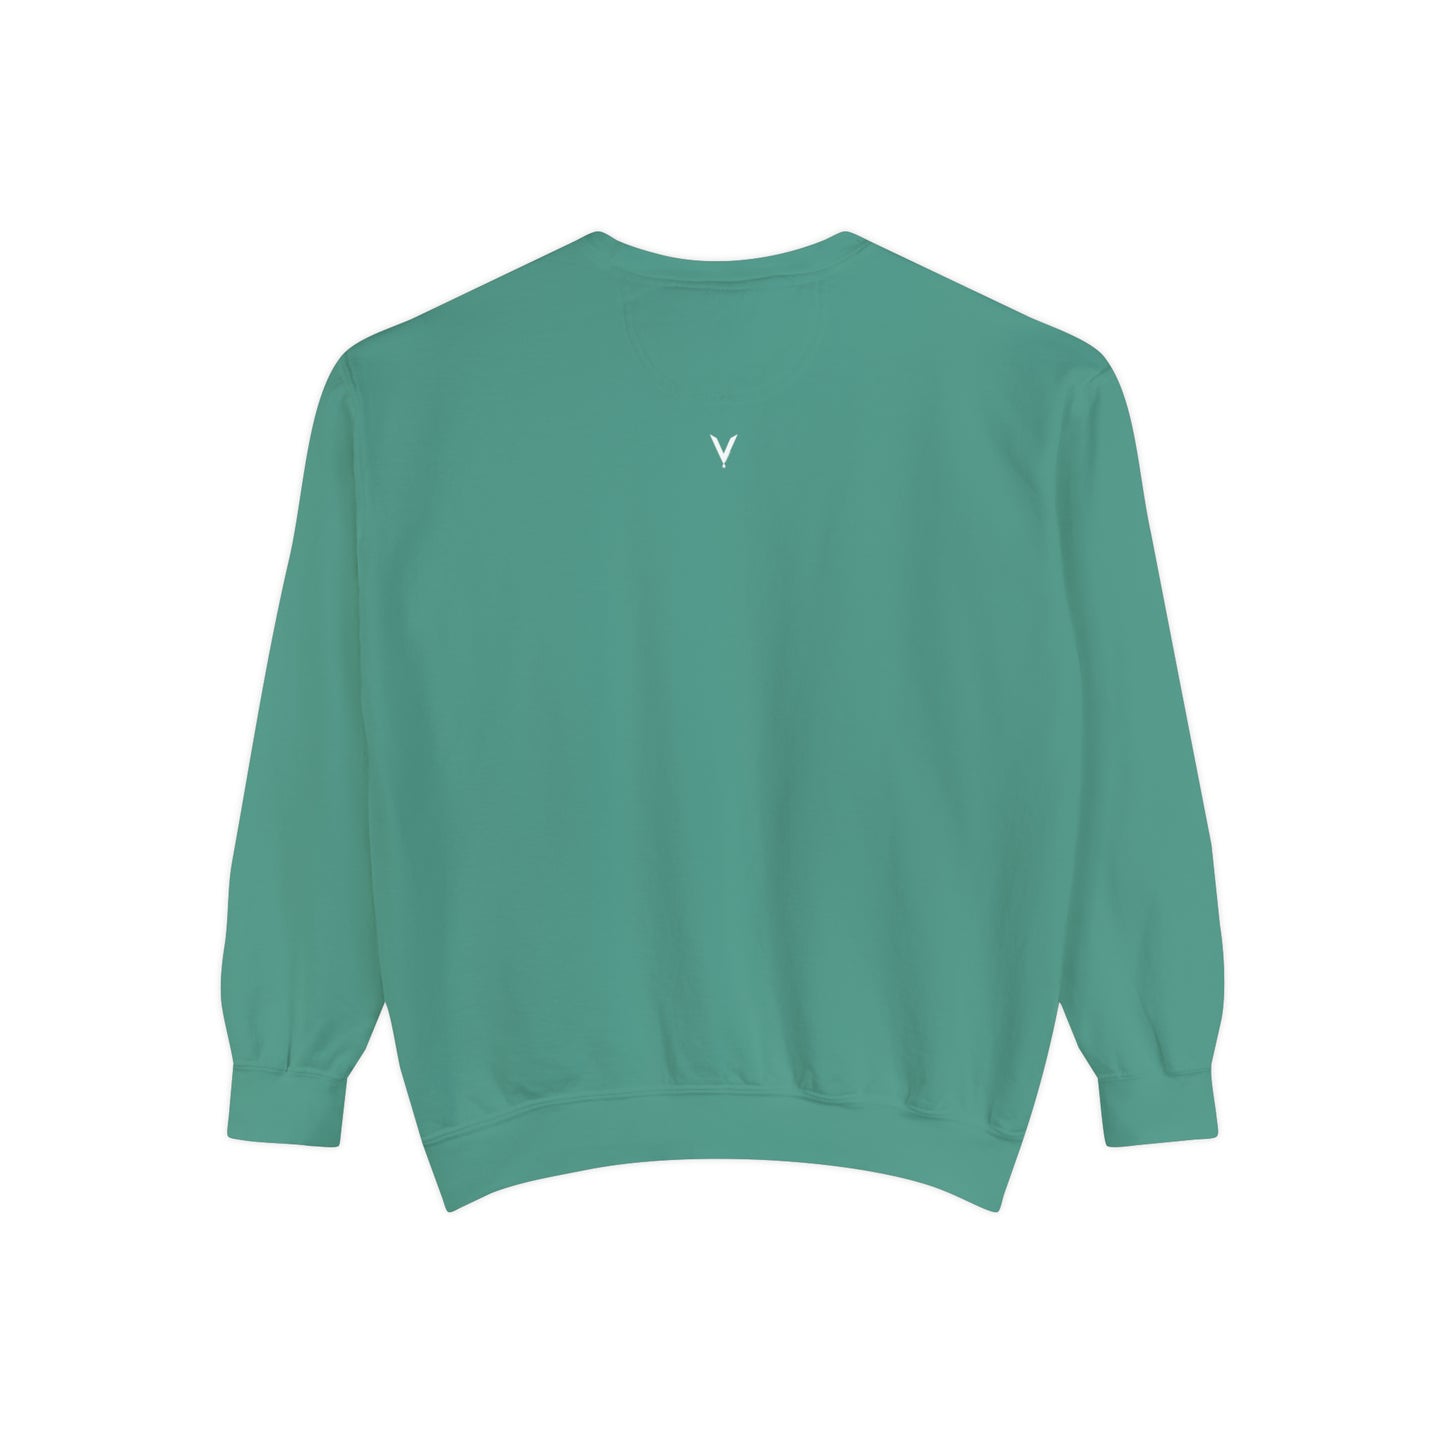 Comfort Color Alabama T Unisex Garment-Dyed Sweatshirt